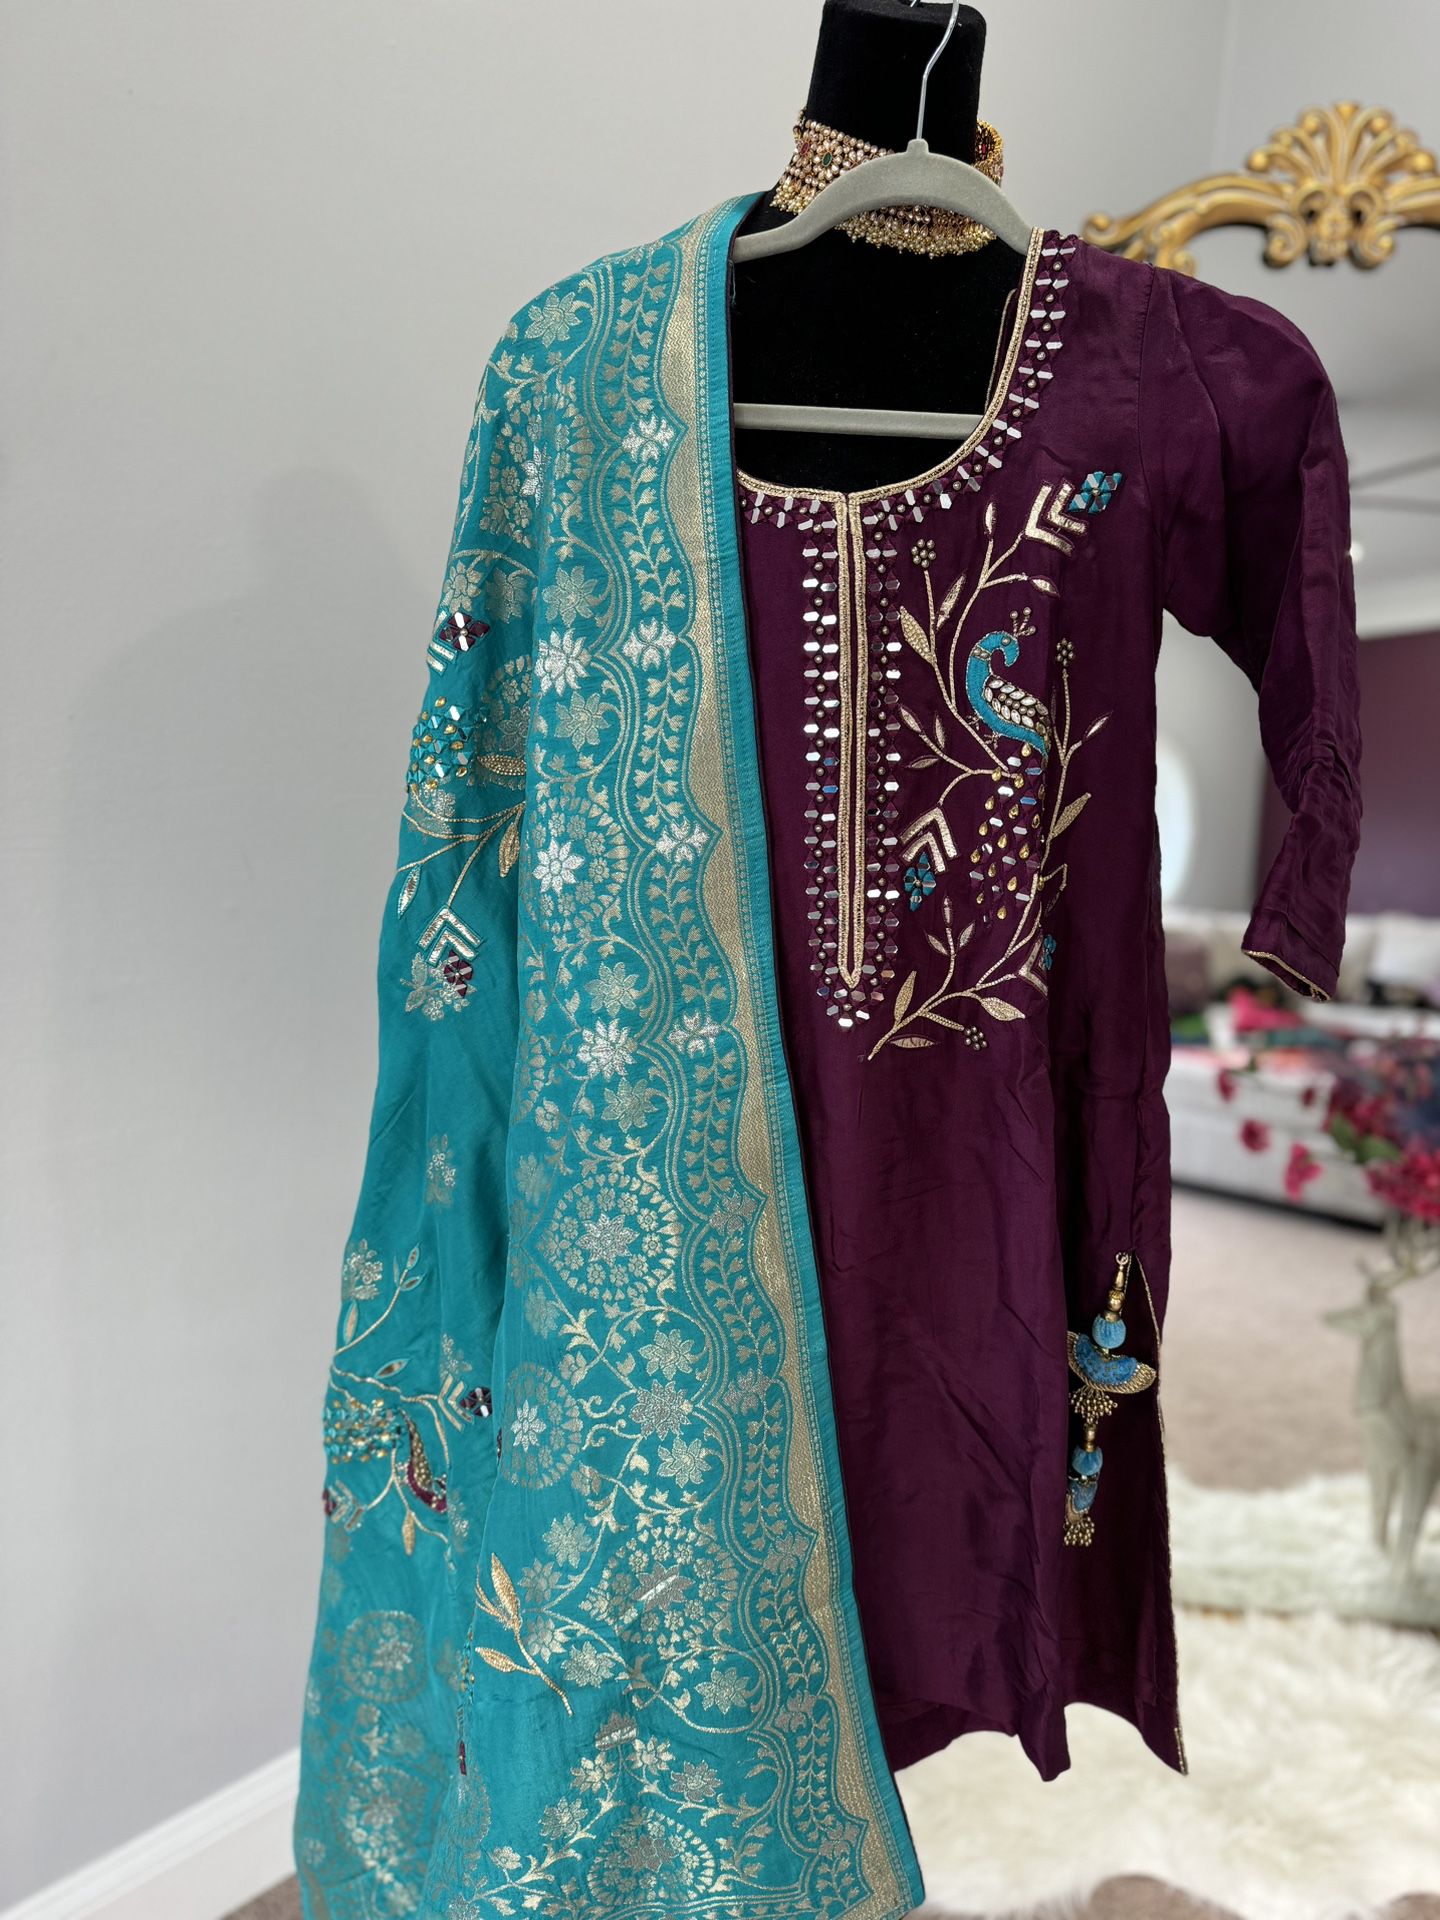 Indian Salwar Suit / Pakistani Suit / Dress 